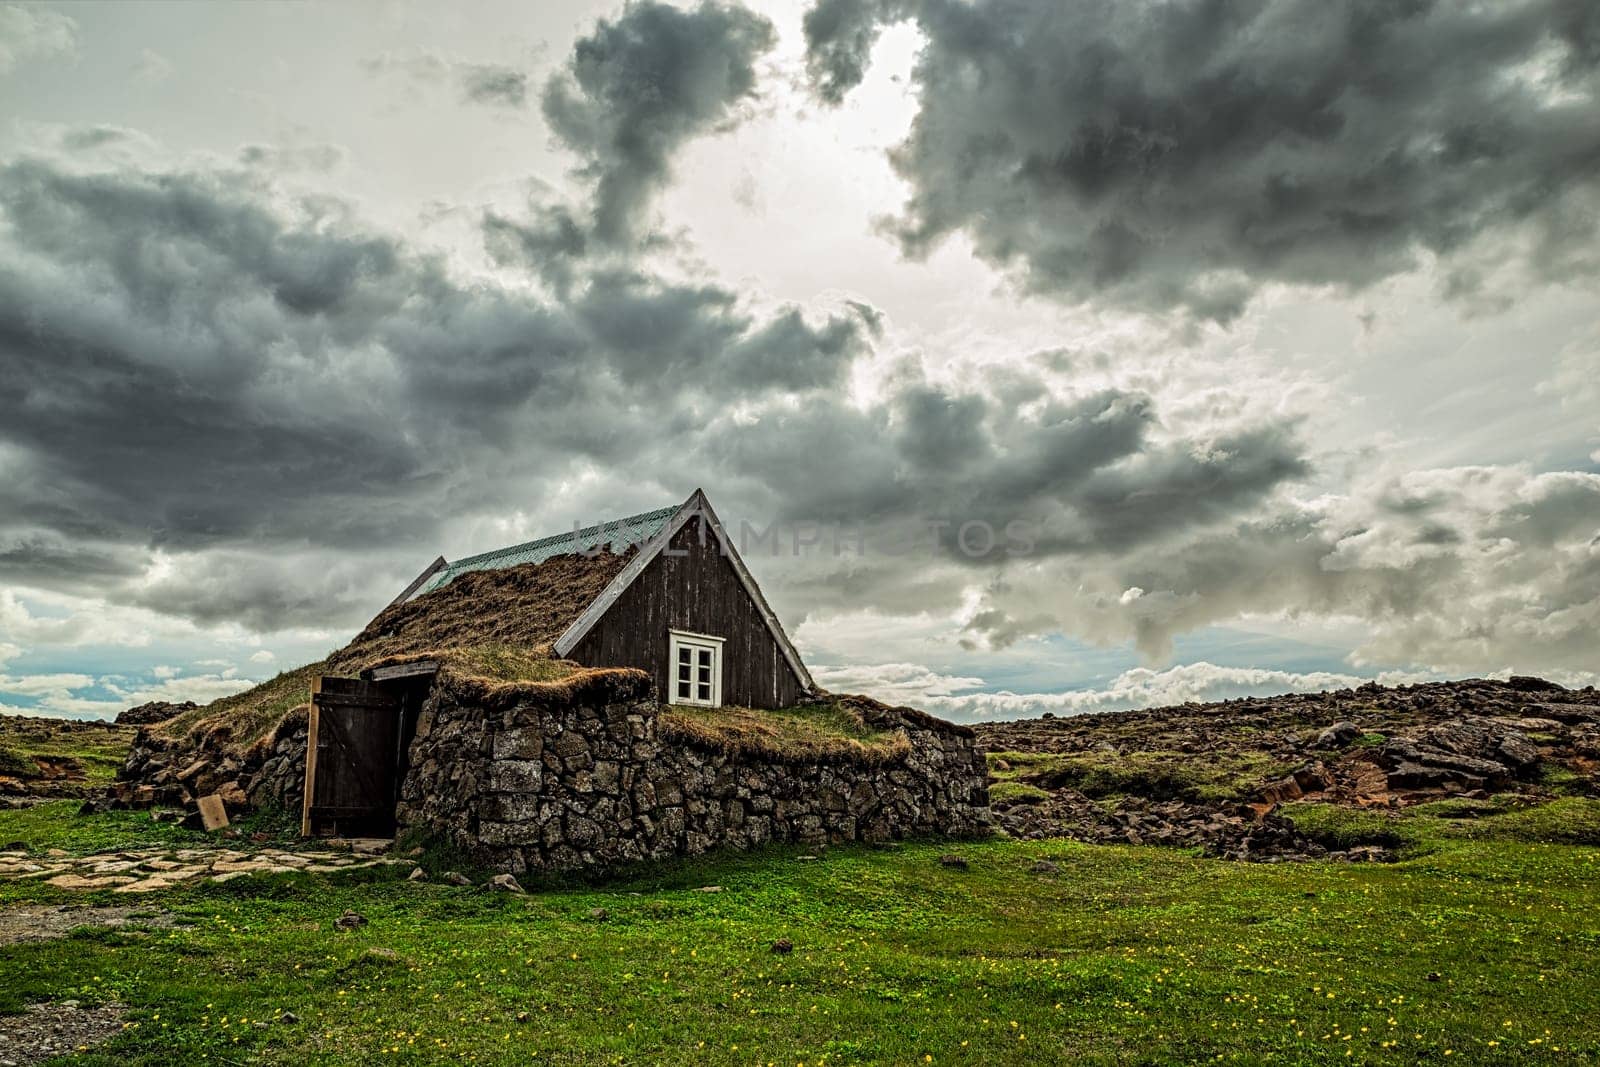 Icelandic traditional turf house at Hveravellir, Iceland by LuigiMorbidelli